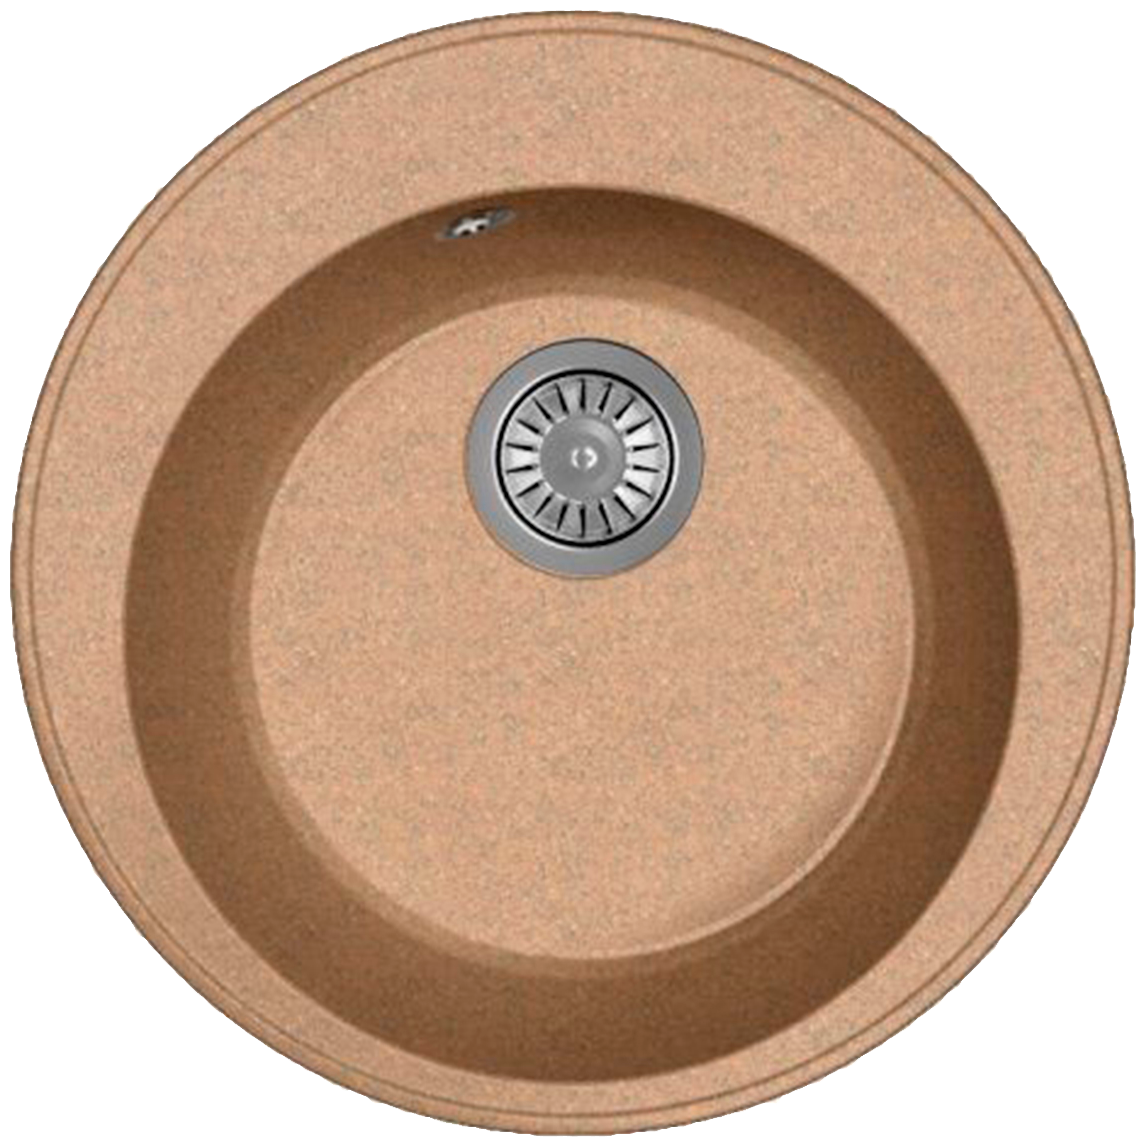 Мойка для кухни врезная каменная Dr. Gans Smart ПИОН-480, цвет терракот, круглая, 480х480х197 мм